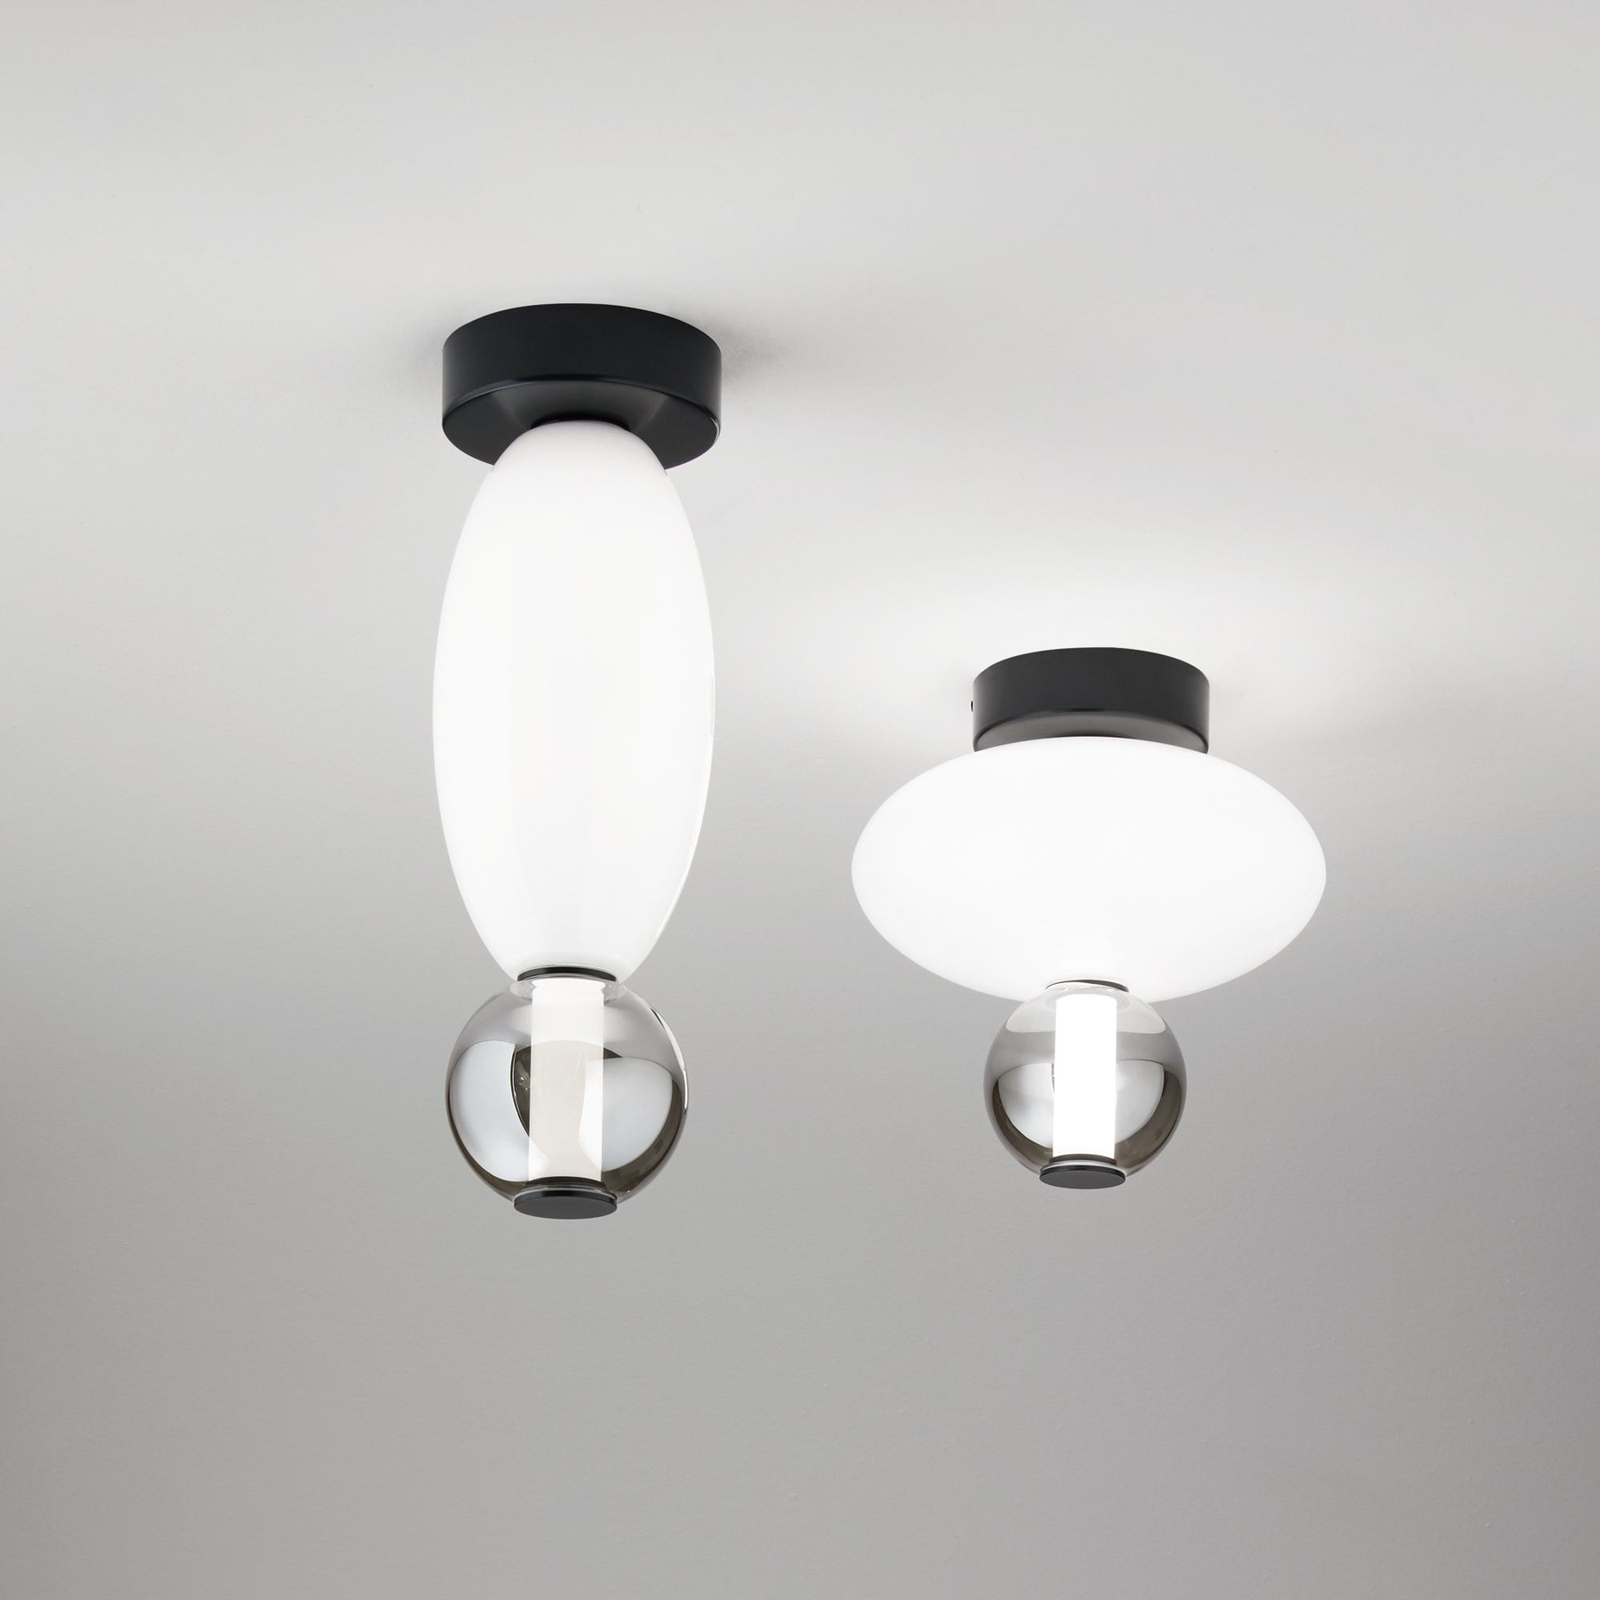 Ideal Lux taklampe Lumiere-1, opal/grått glass, svart